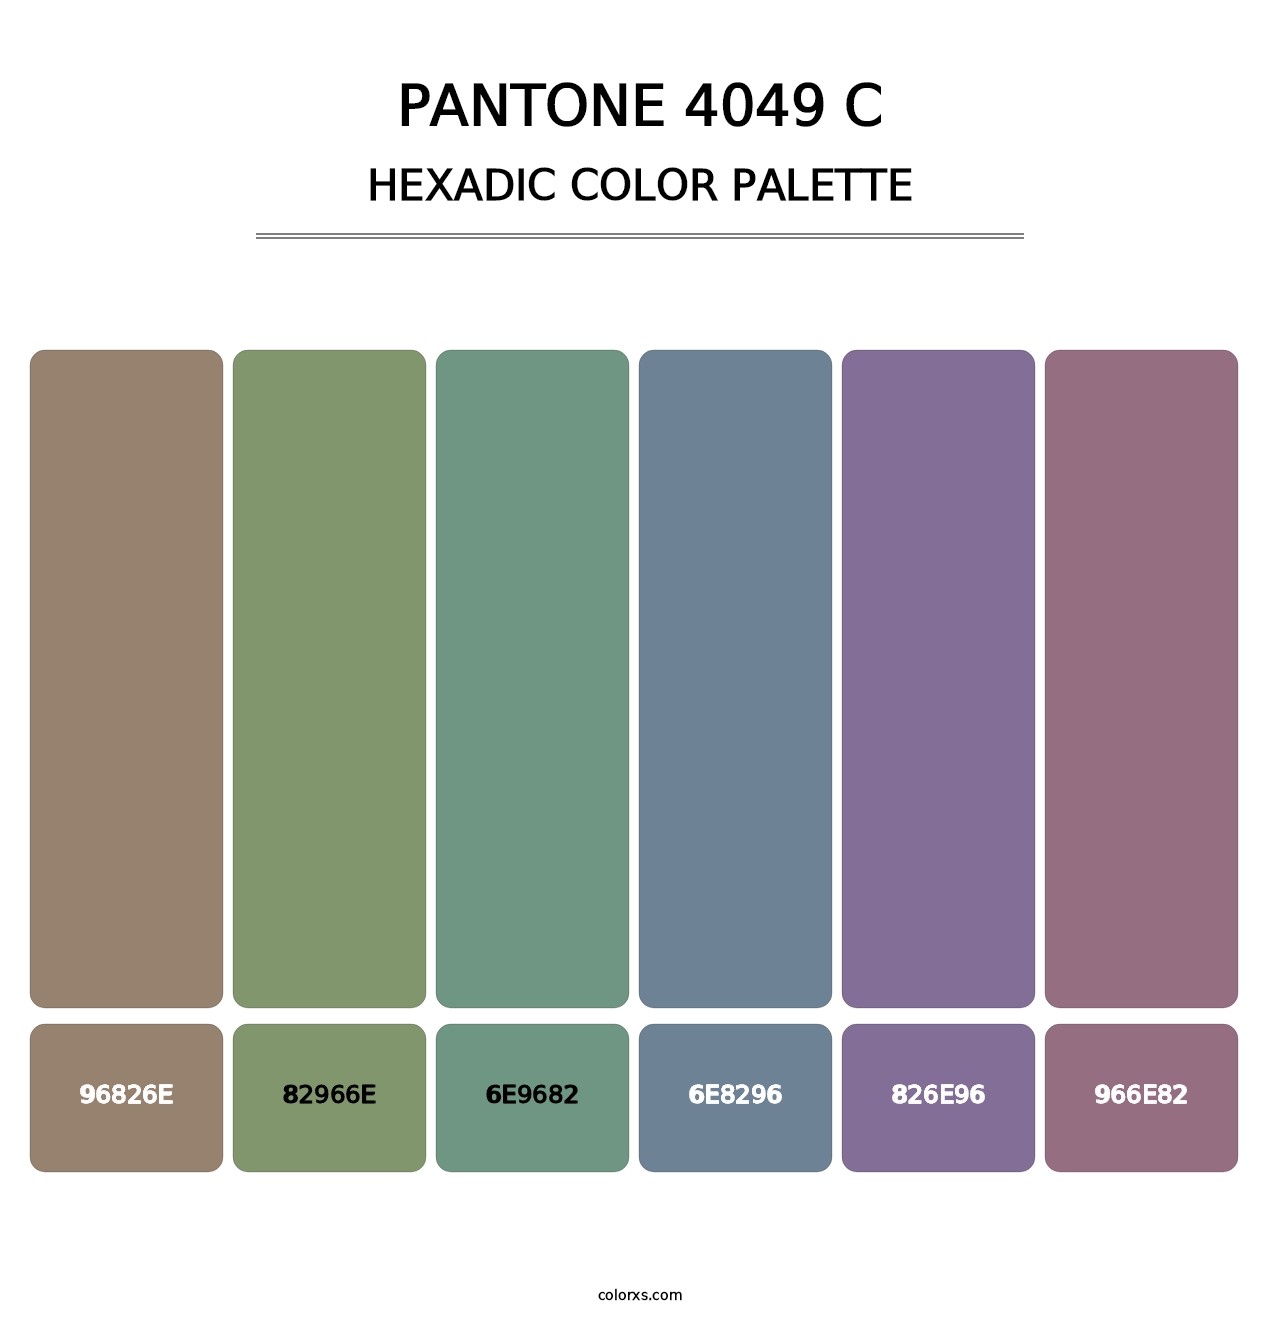 PANTONE 4049 C - Hexadic Color Palette